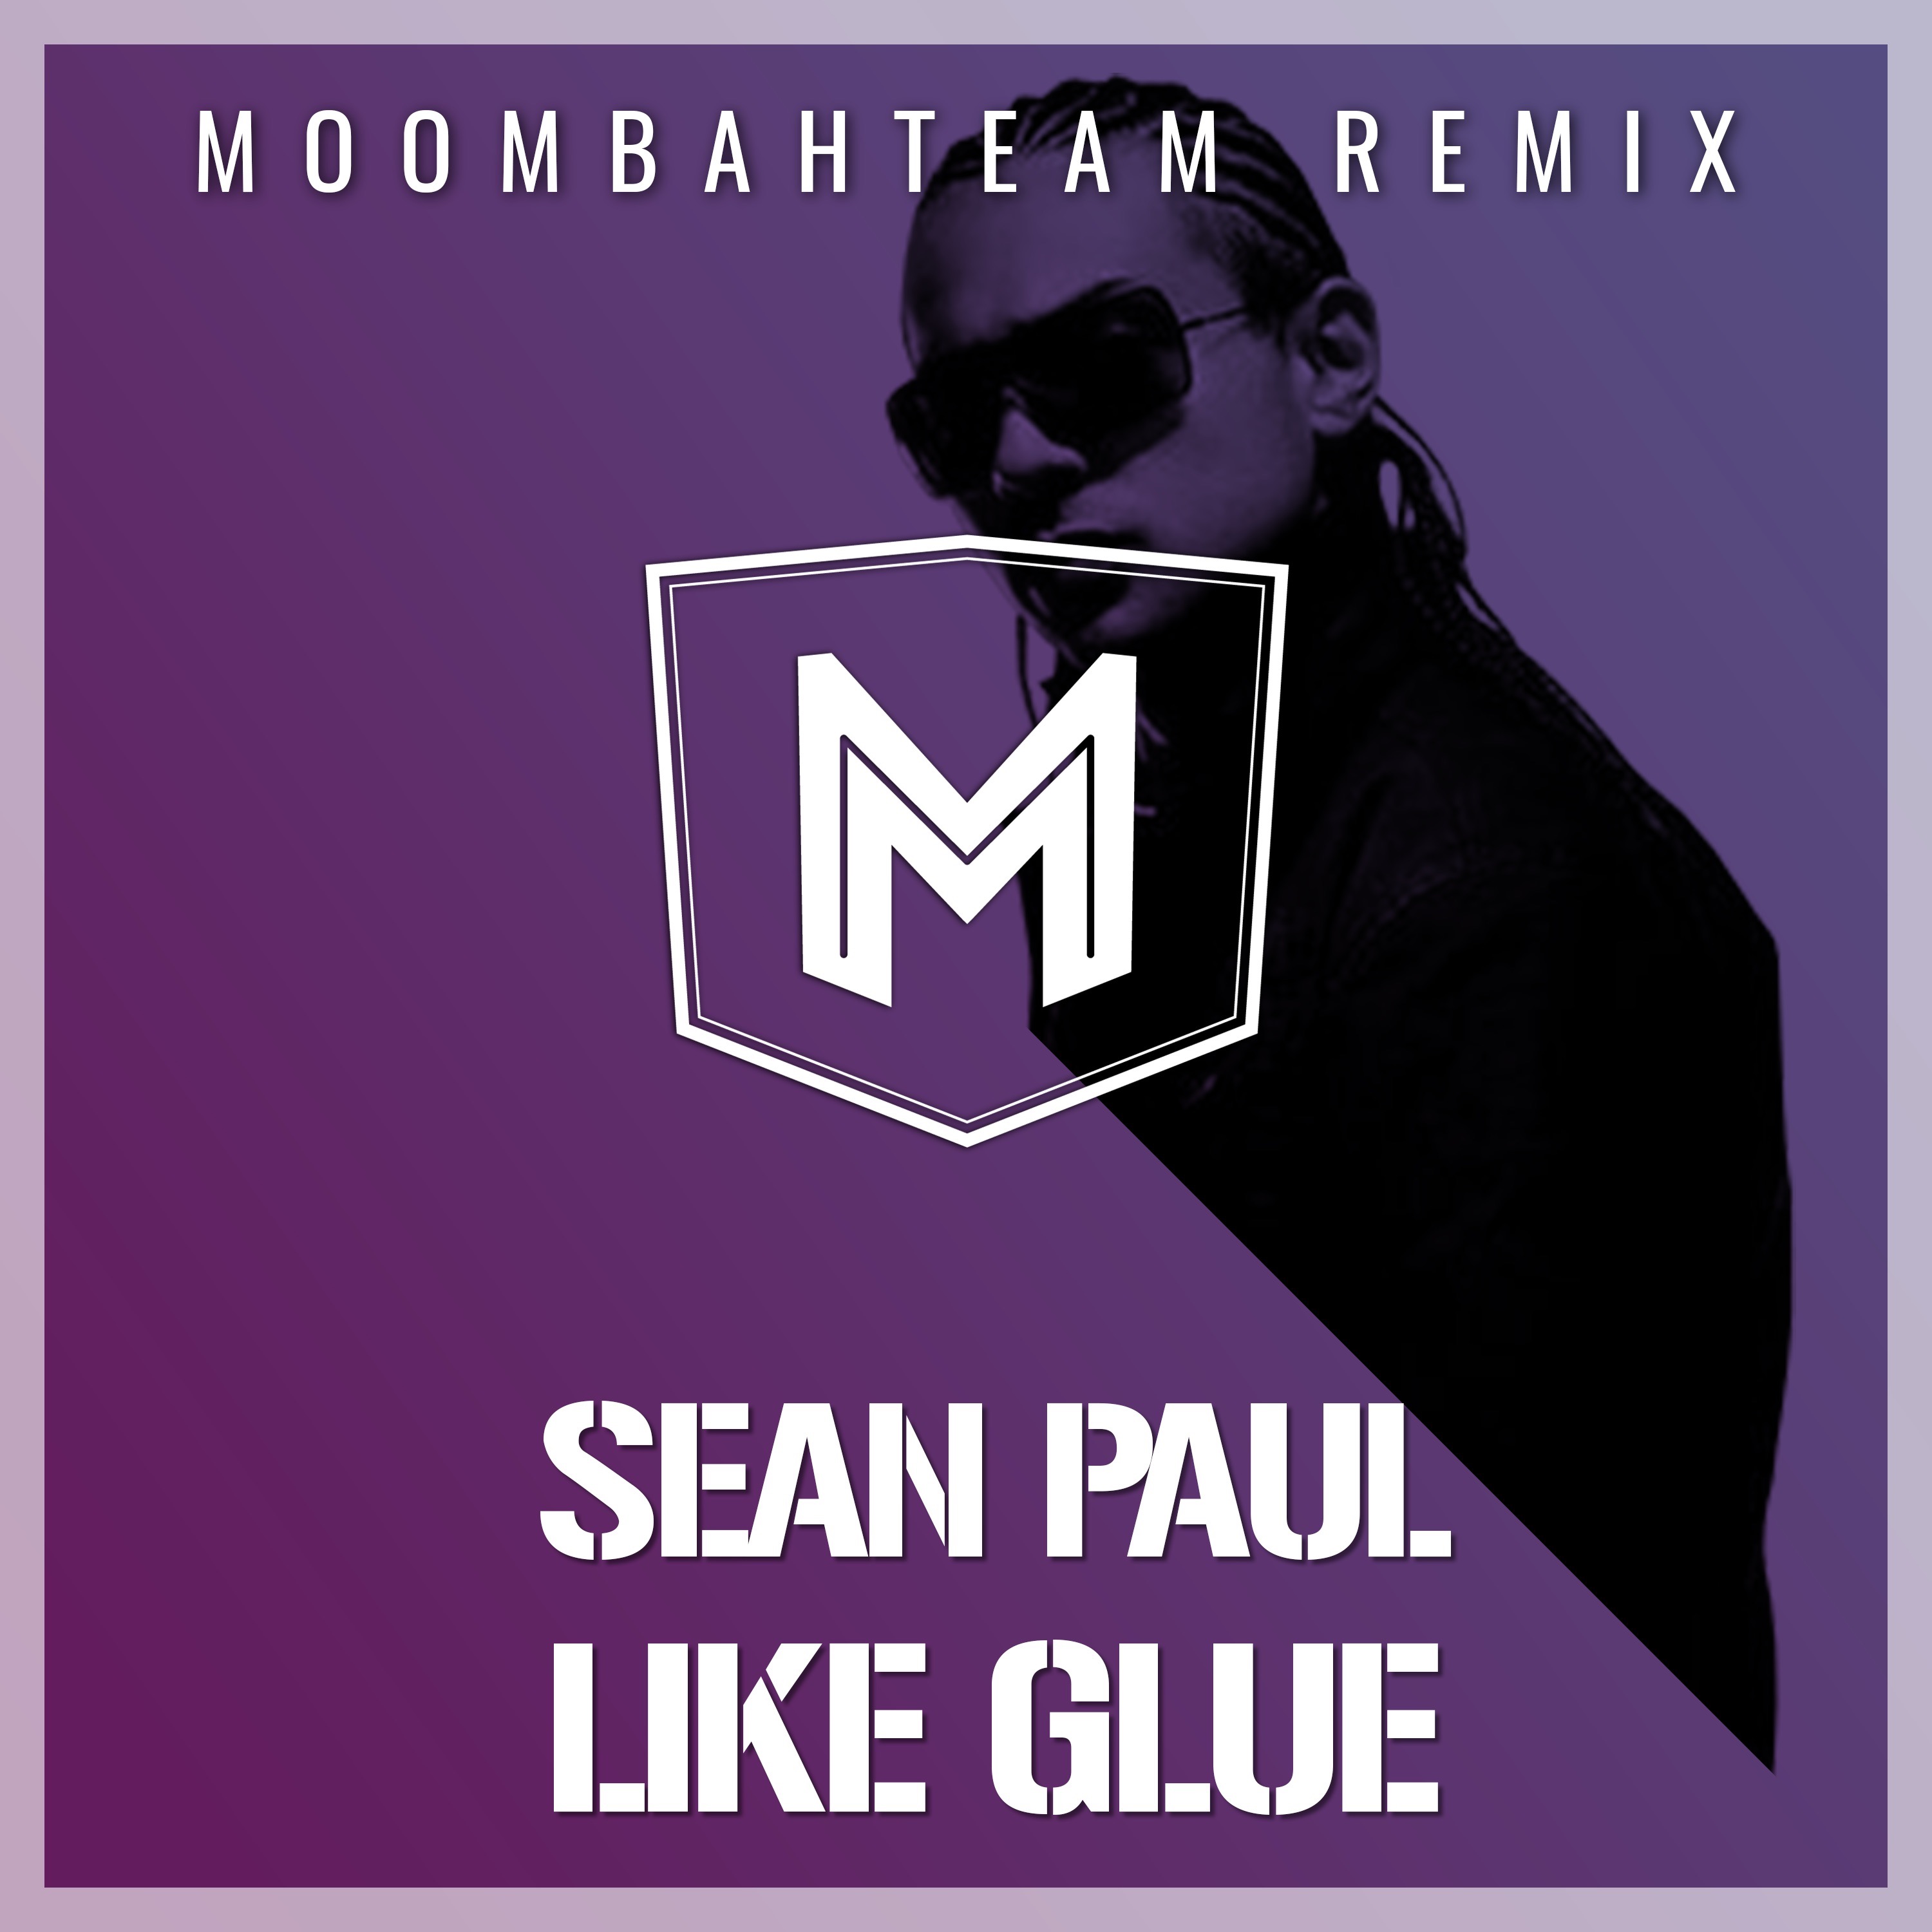 Sean Paul - Like Glue (Moombahteam Remix)